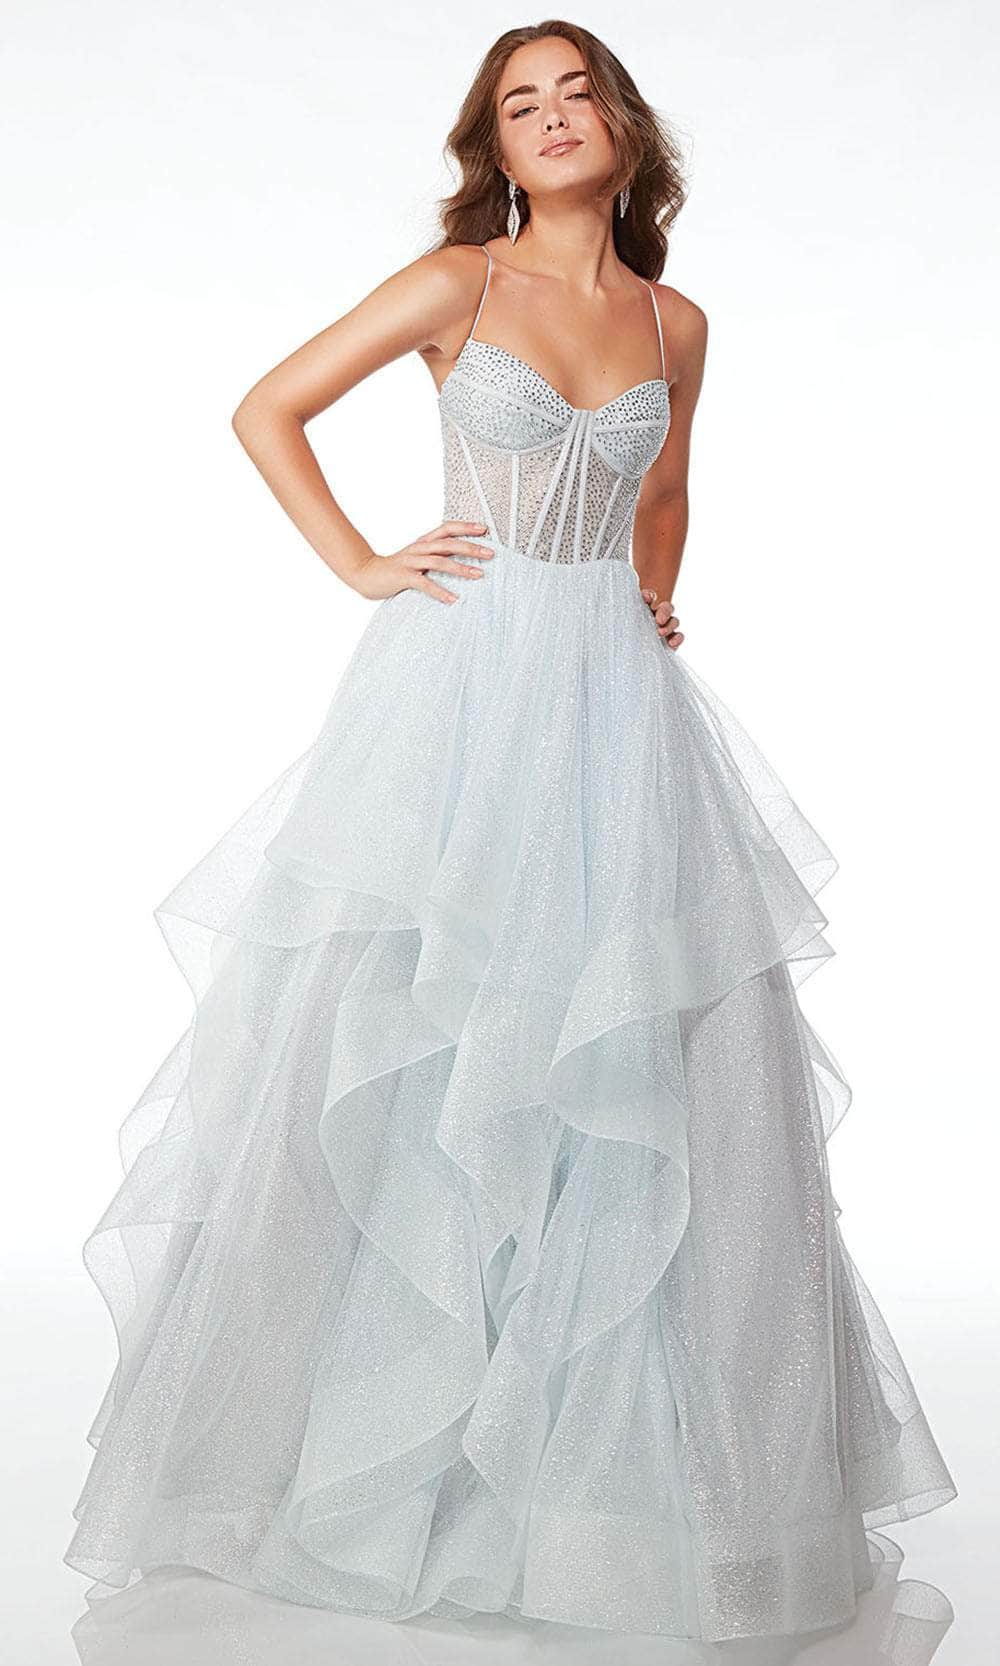 Alyce Paris 61637 - Bustier Glitter Prom Dress
